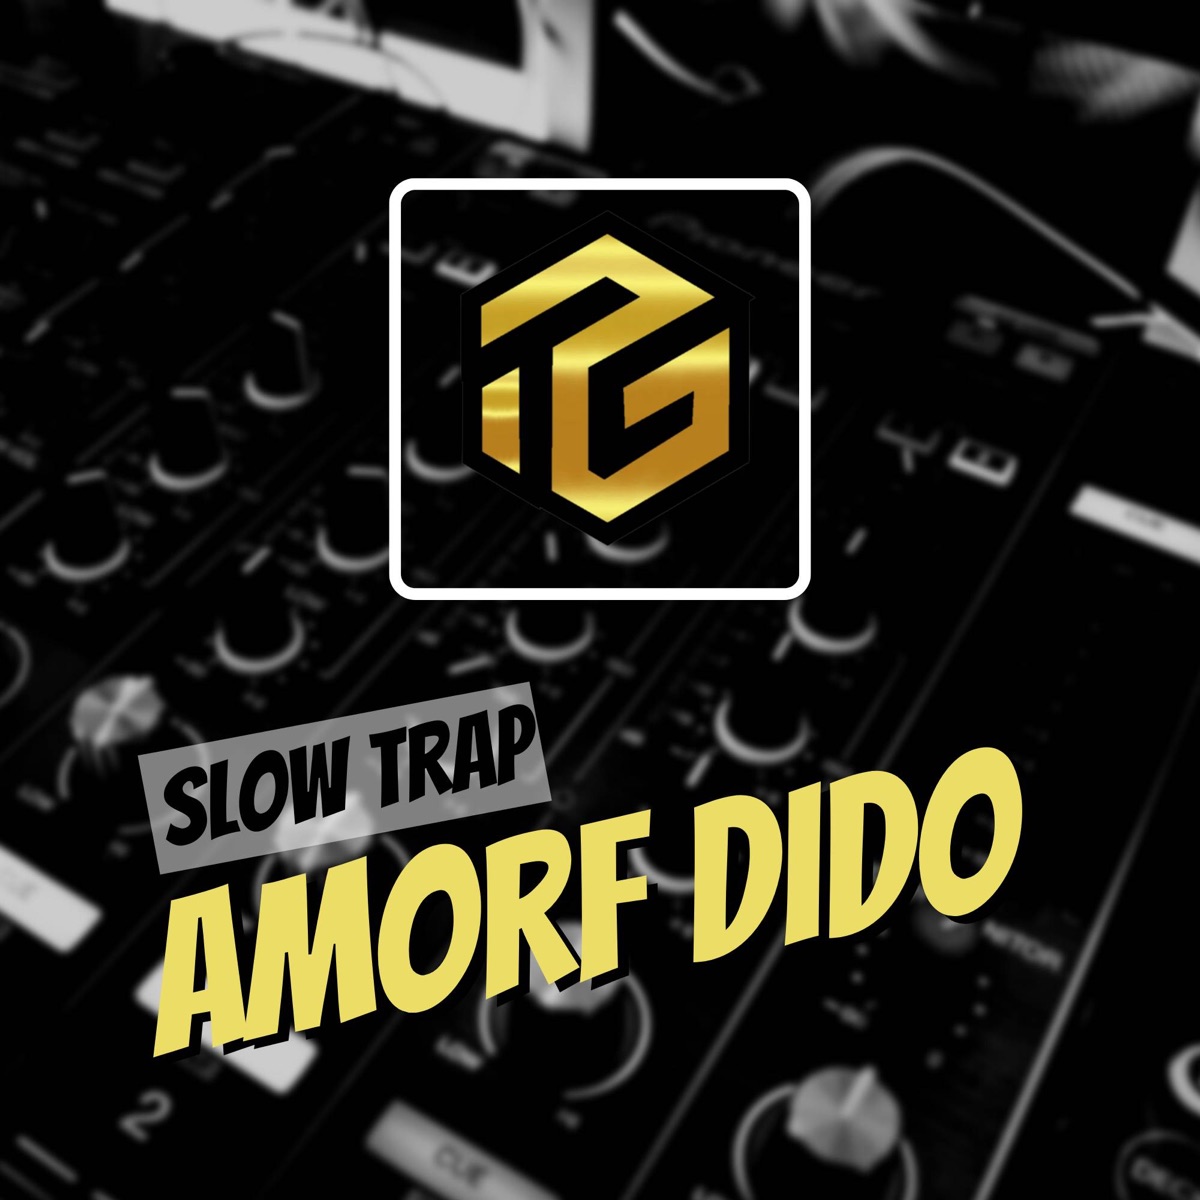 DJ Amorf Dido - Single - Album by Tugu Music - Apple Music